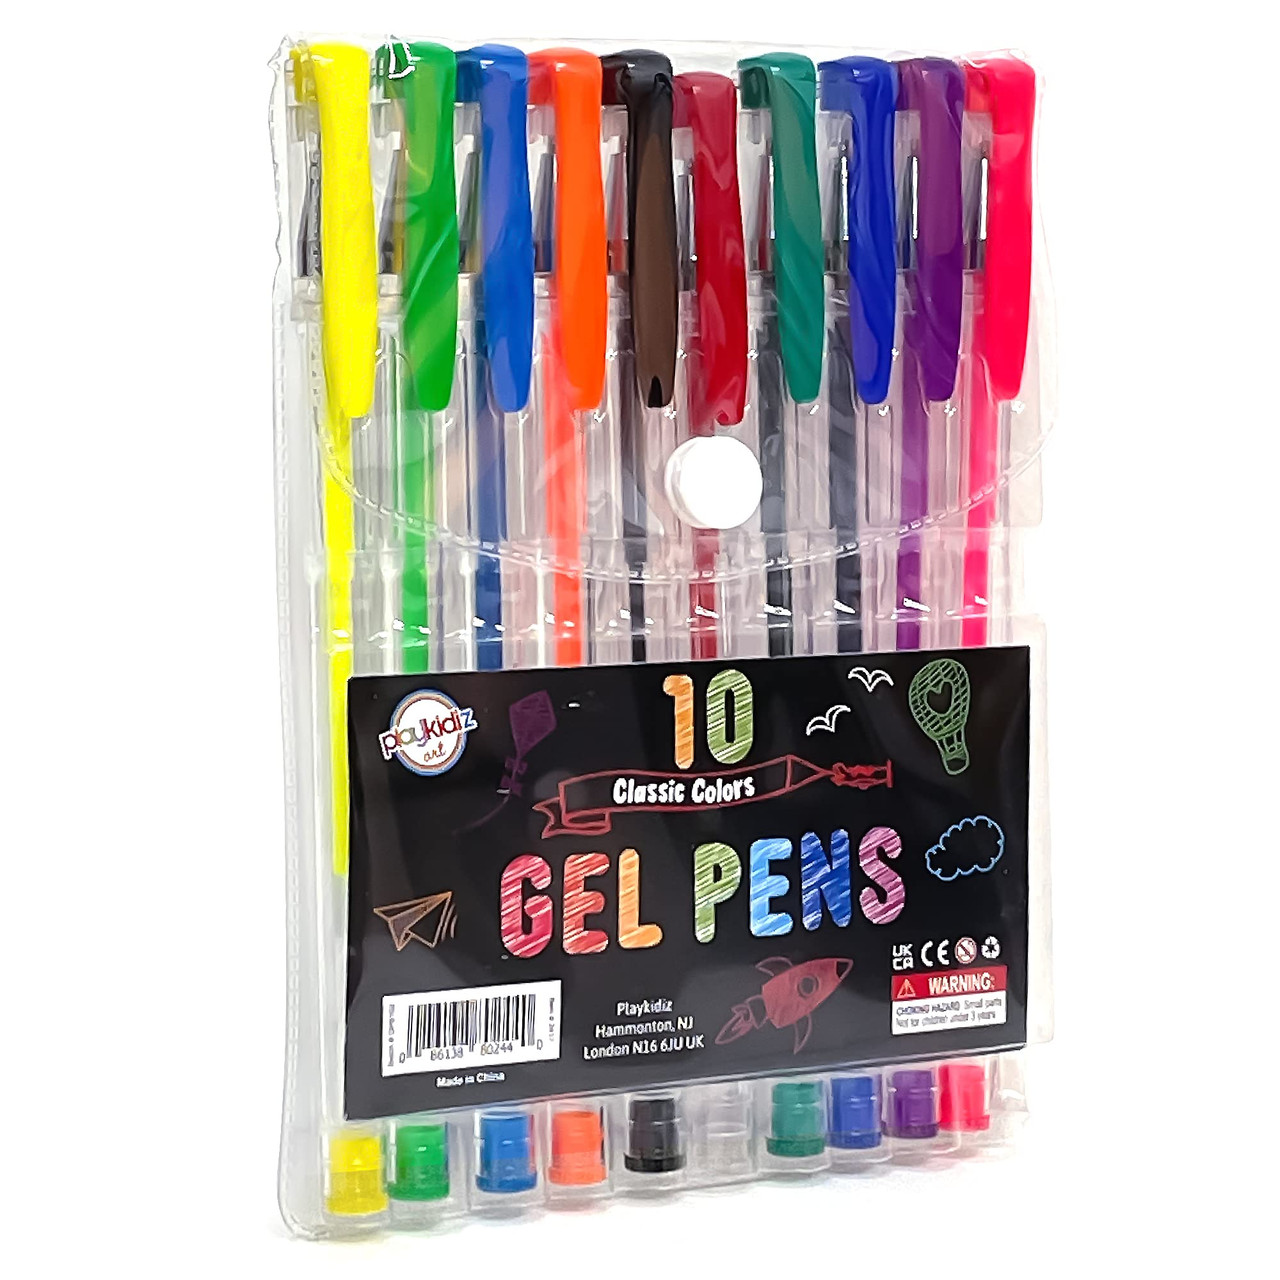 Colored Gel Pens Make Adult Coloring Very Interesting